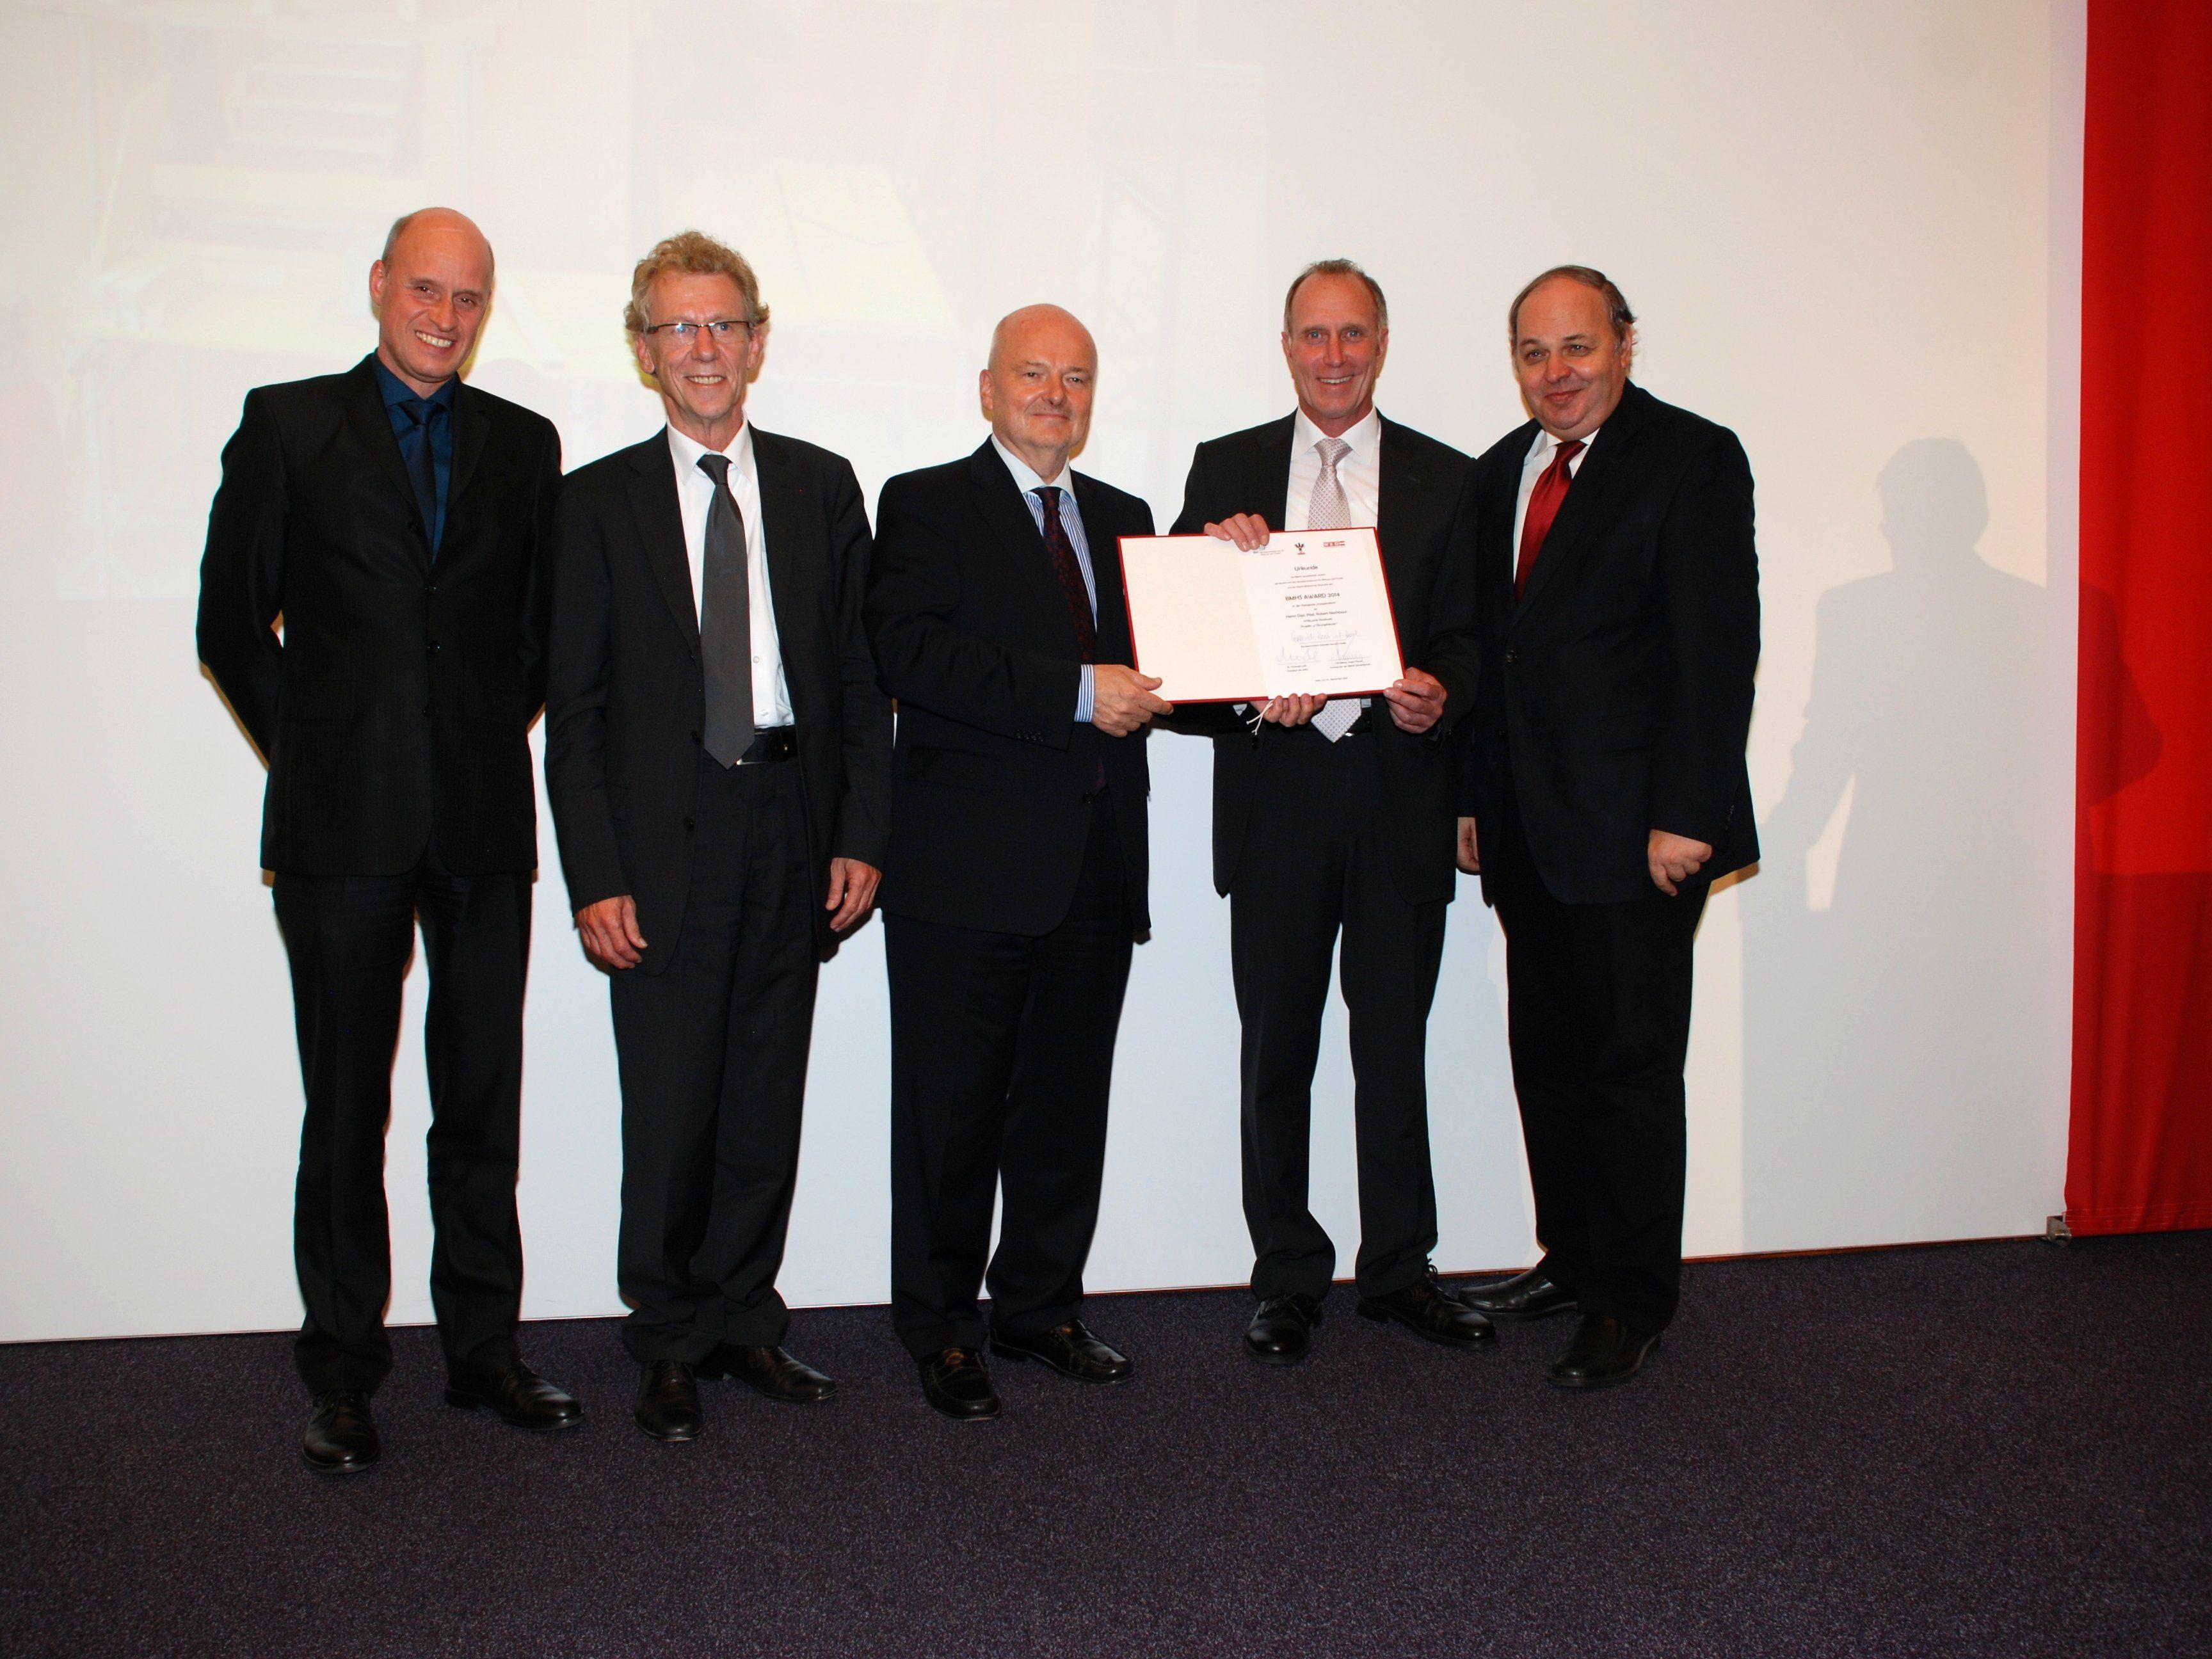 BMHS-Award 2014 an Robert Nachbaur. v.li.: DI Johannes Schwärzler (LSR f. Vorarlberg), DI Gerhard Wimmer (Direktor HTL Rankweil), Dr. Michael Landertshammer (WKÖ), Preisträger Dipl.-Päd. Robert Nachbaur, DI Dr. Christian Dorninger (BMBF).